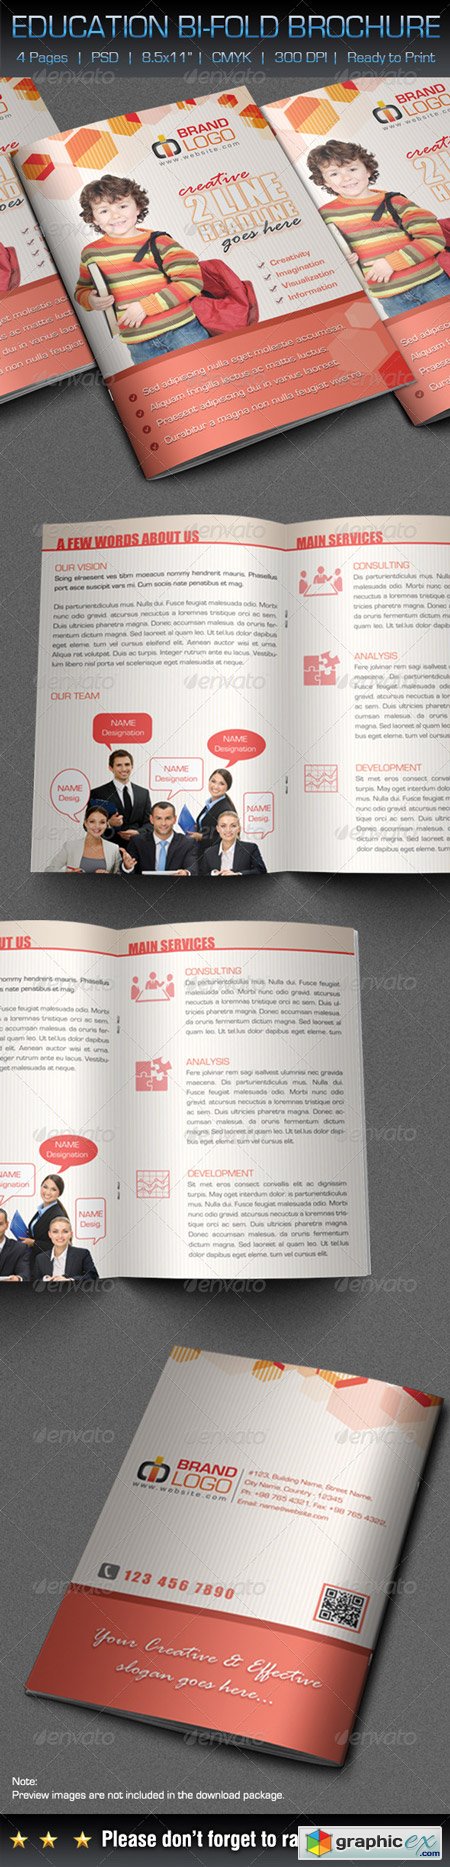 Creative Education Bi-Fold Brochure